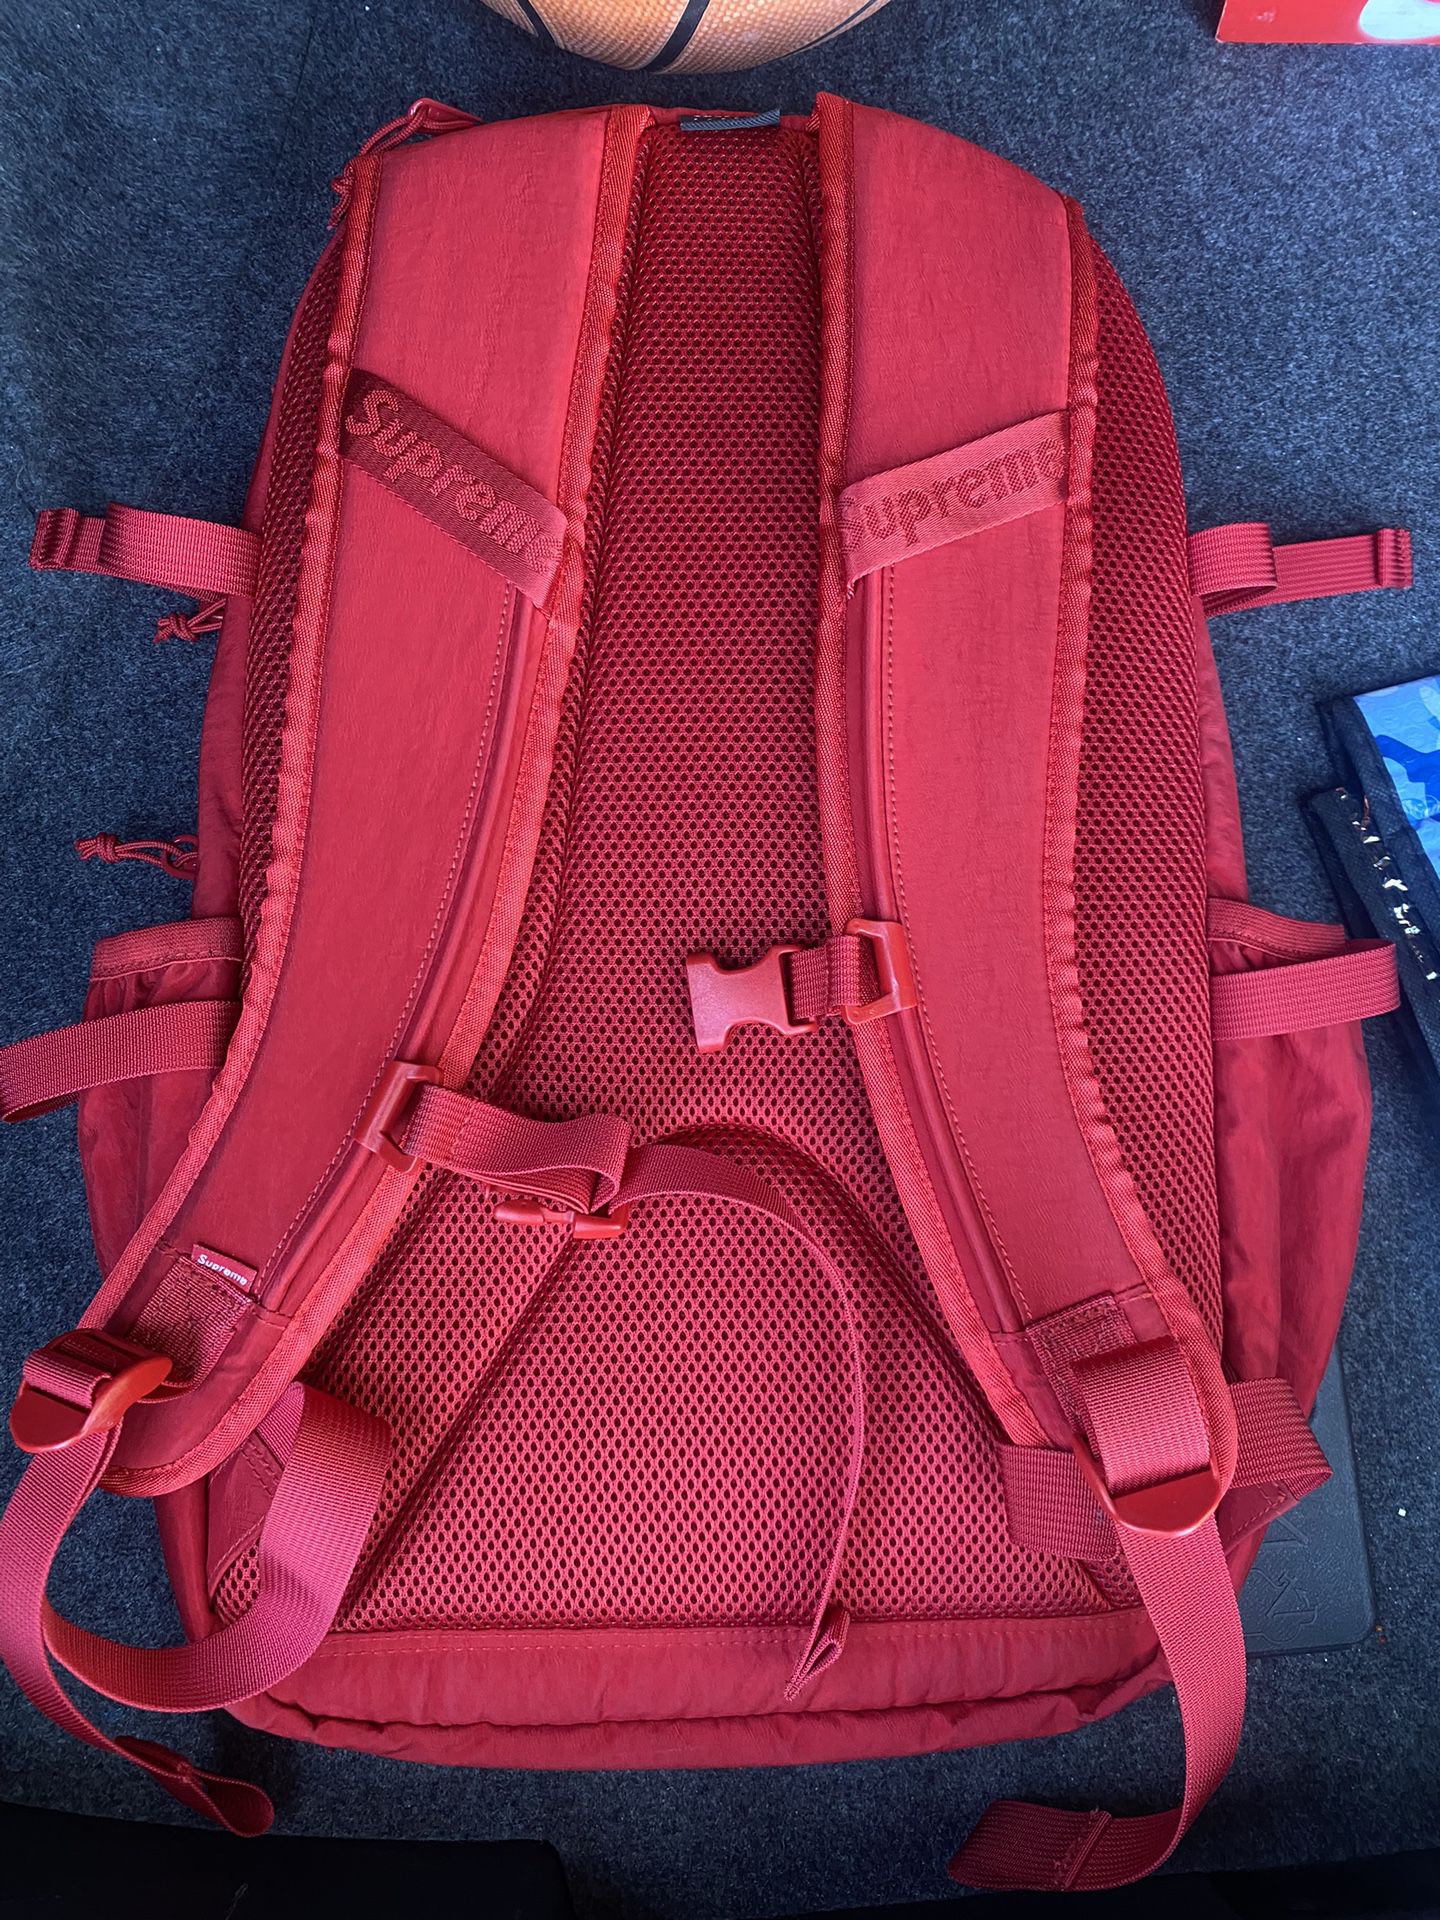 Supreme Backpack FW20 for Sale in Broken Arrow, OK - OfferUp